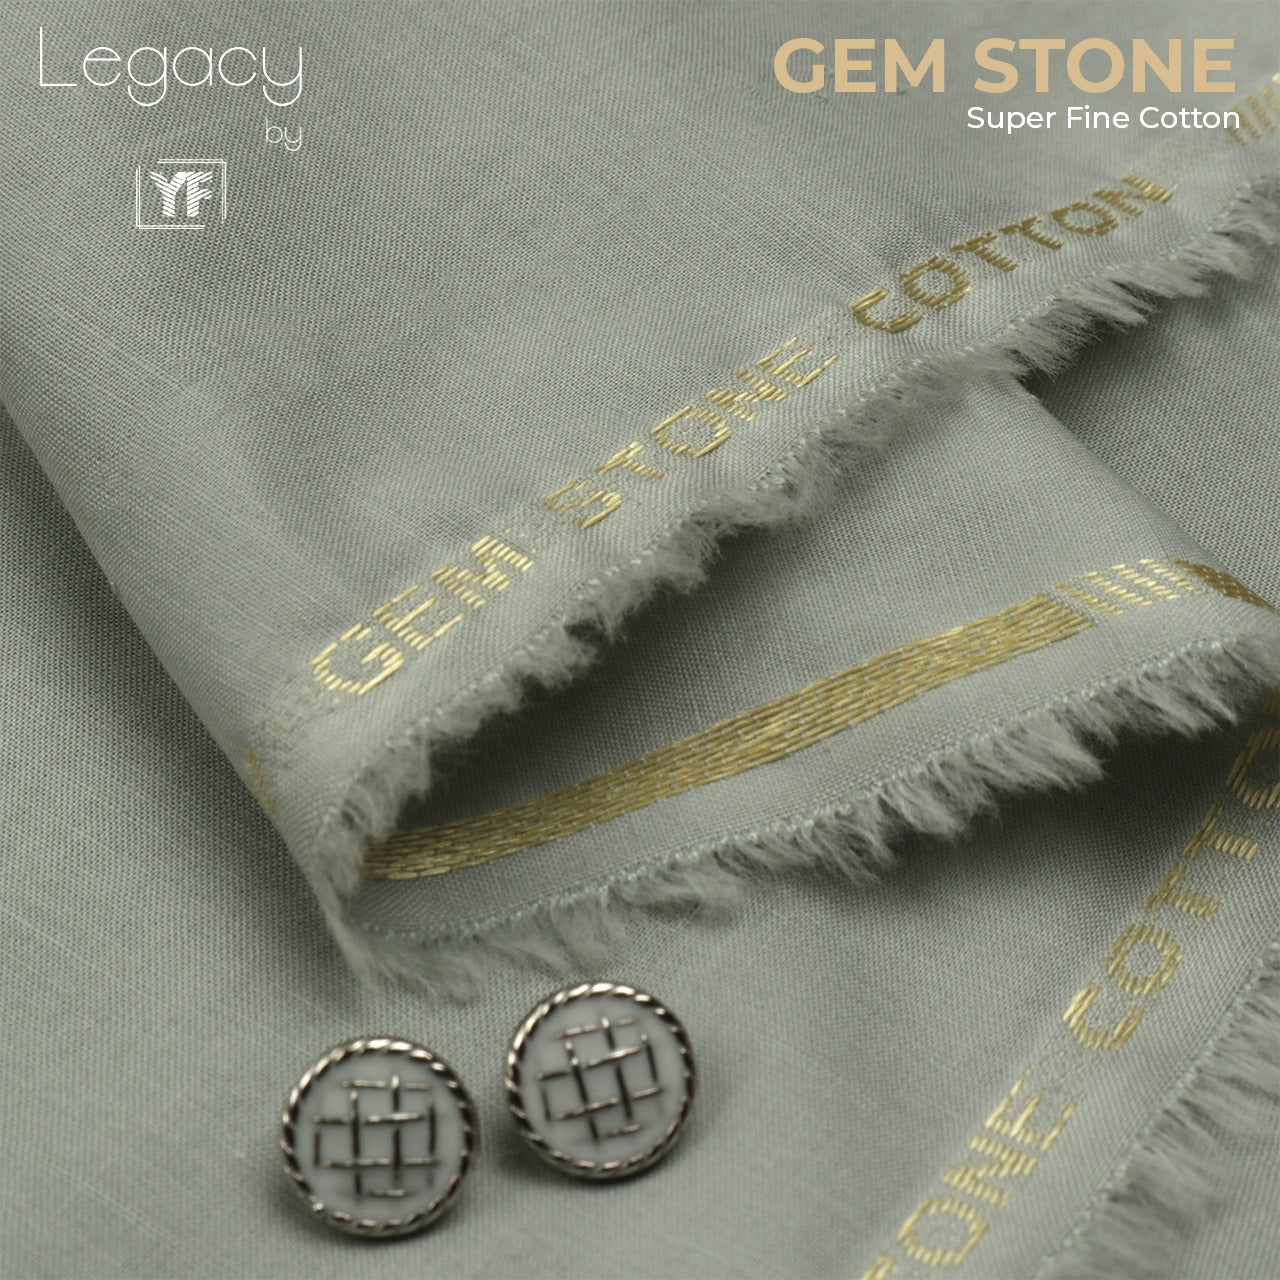 Gemstone 08 Unstitched Cotton Men suit (Sea Green)